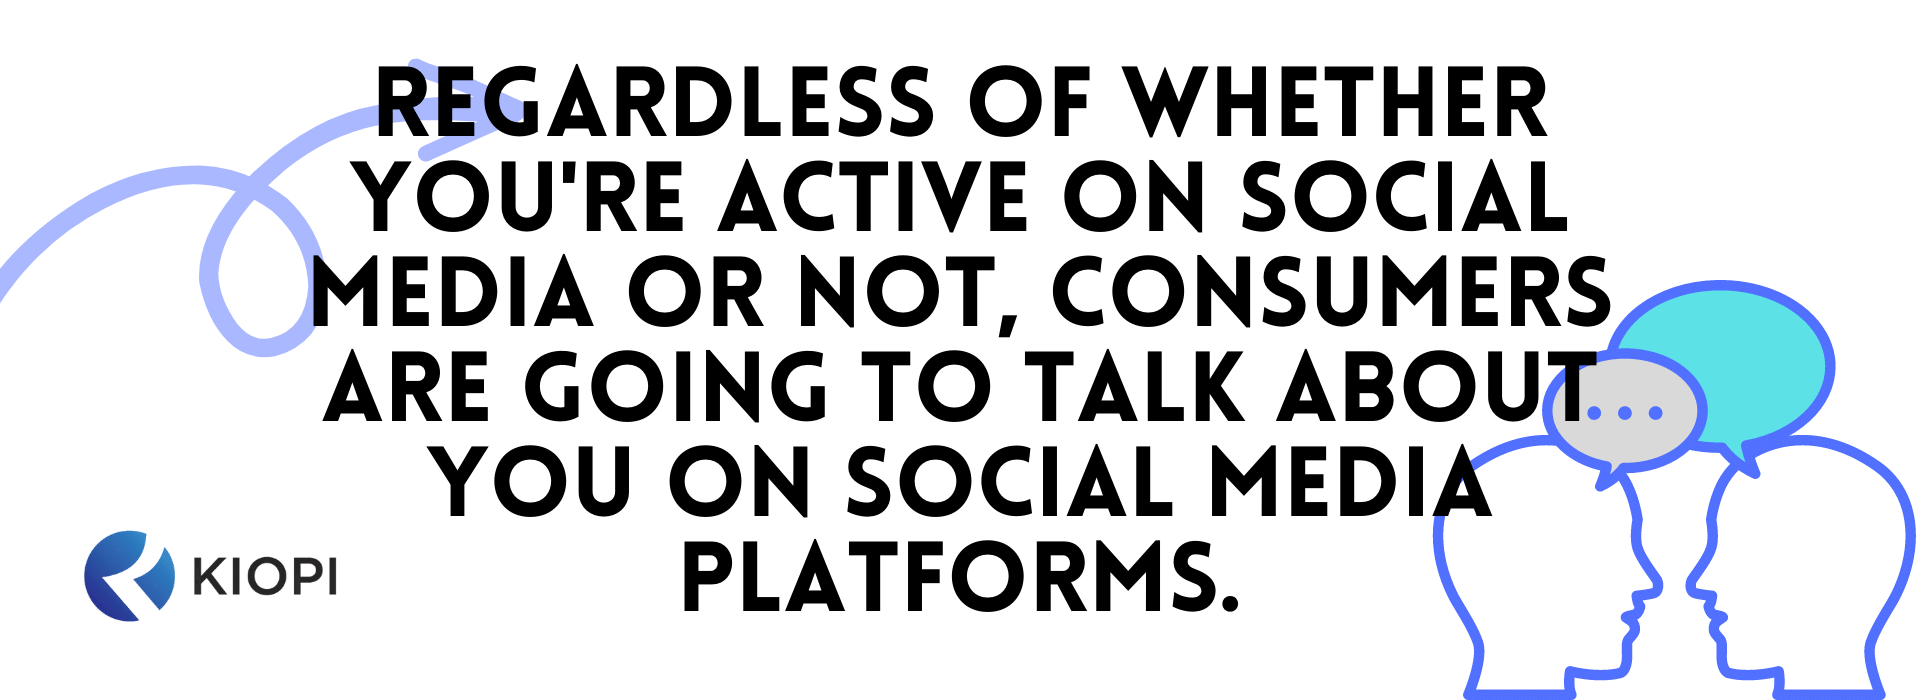 social media benefits for business